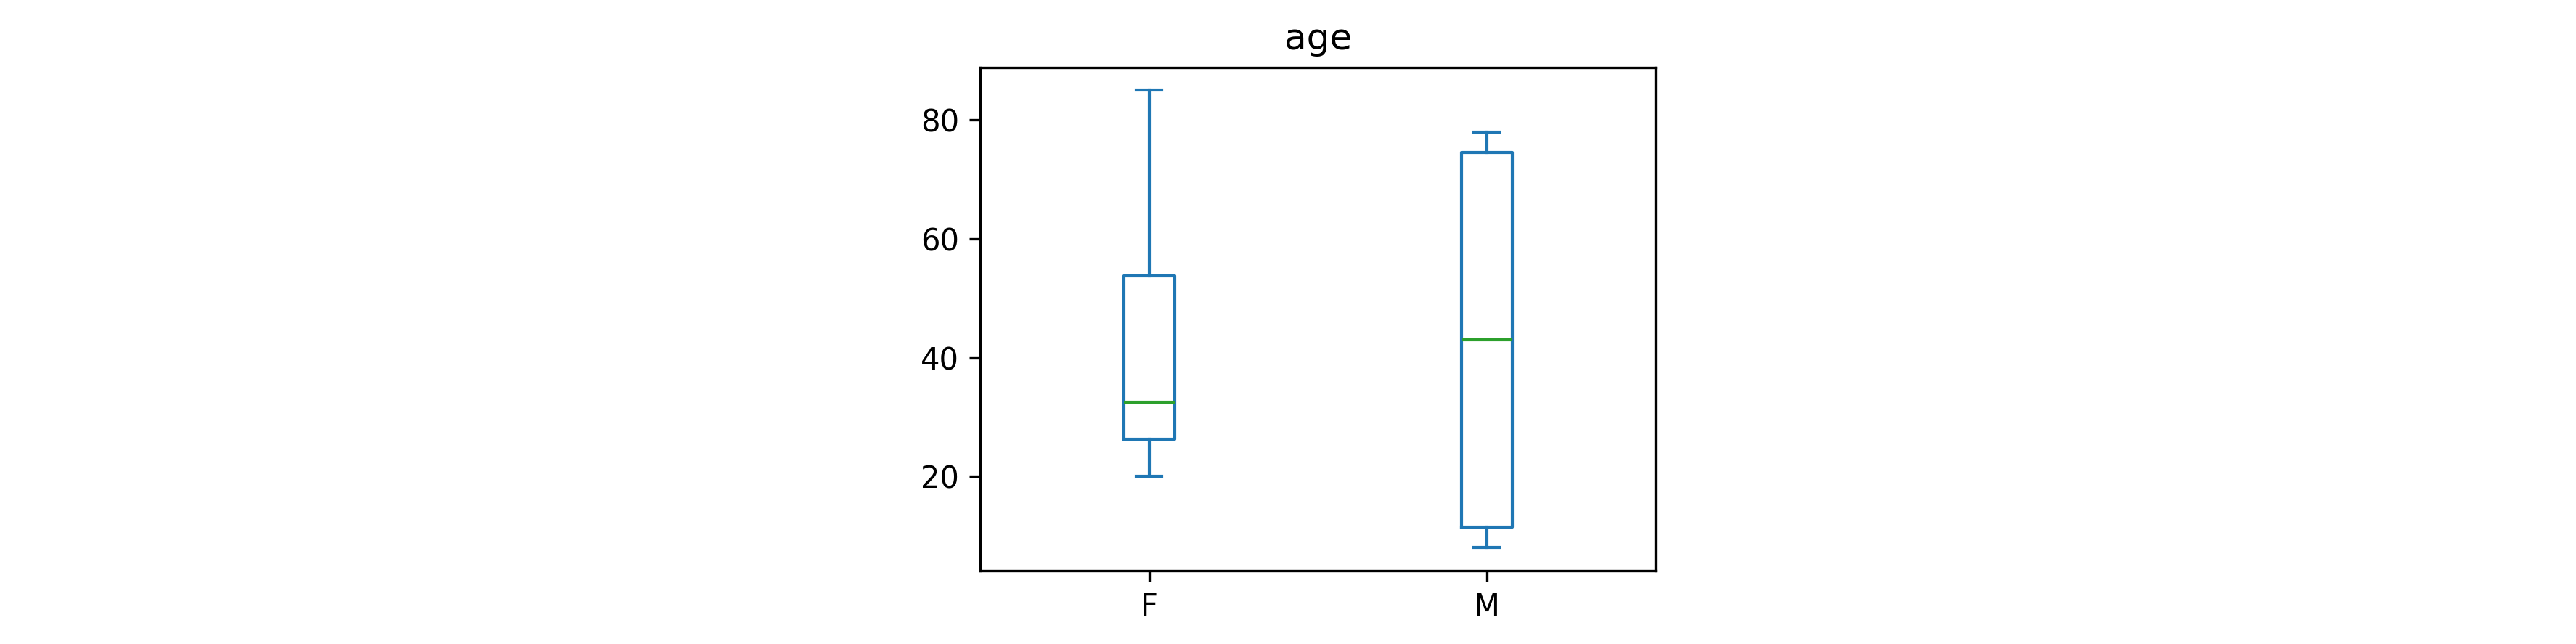 docs/assets/by=gender+column=age+viz=box+ext=_padded.png